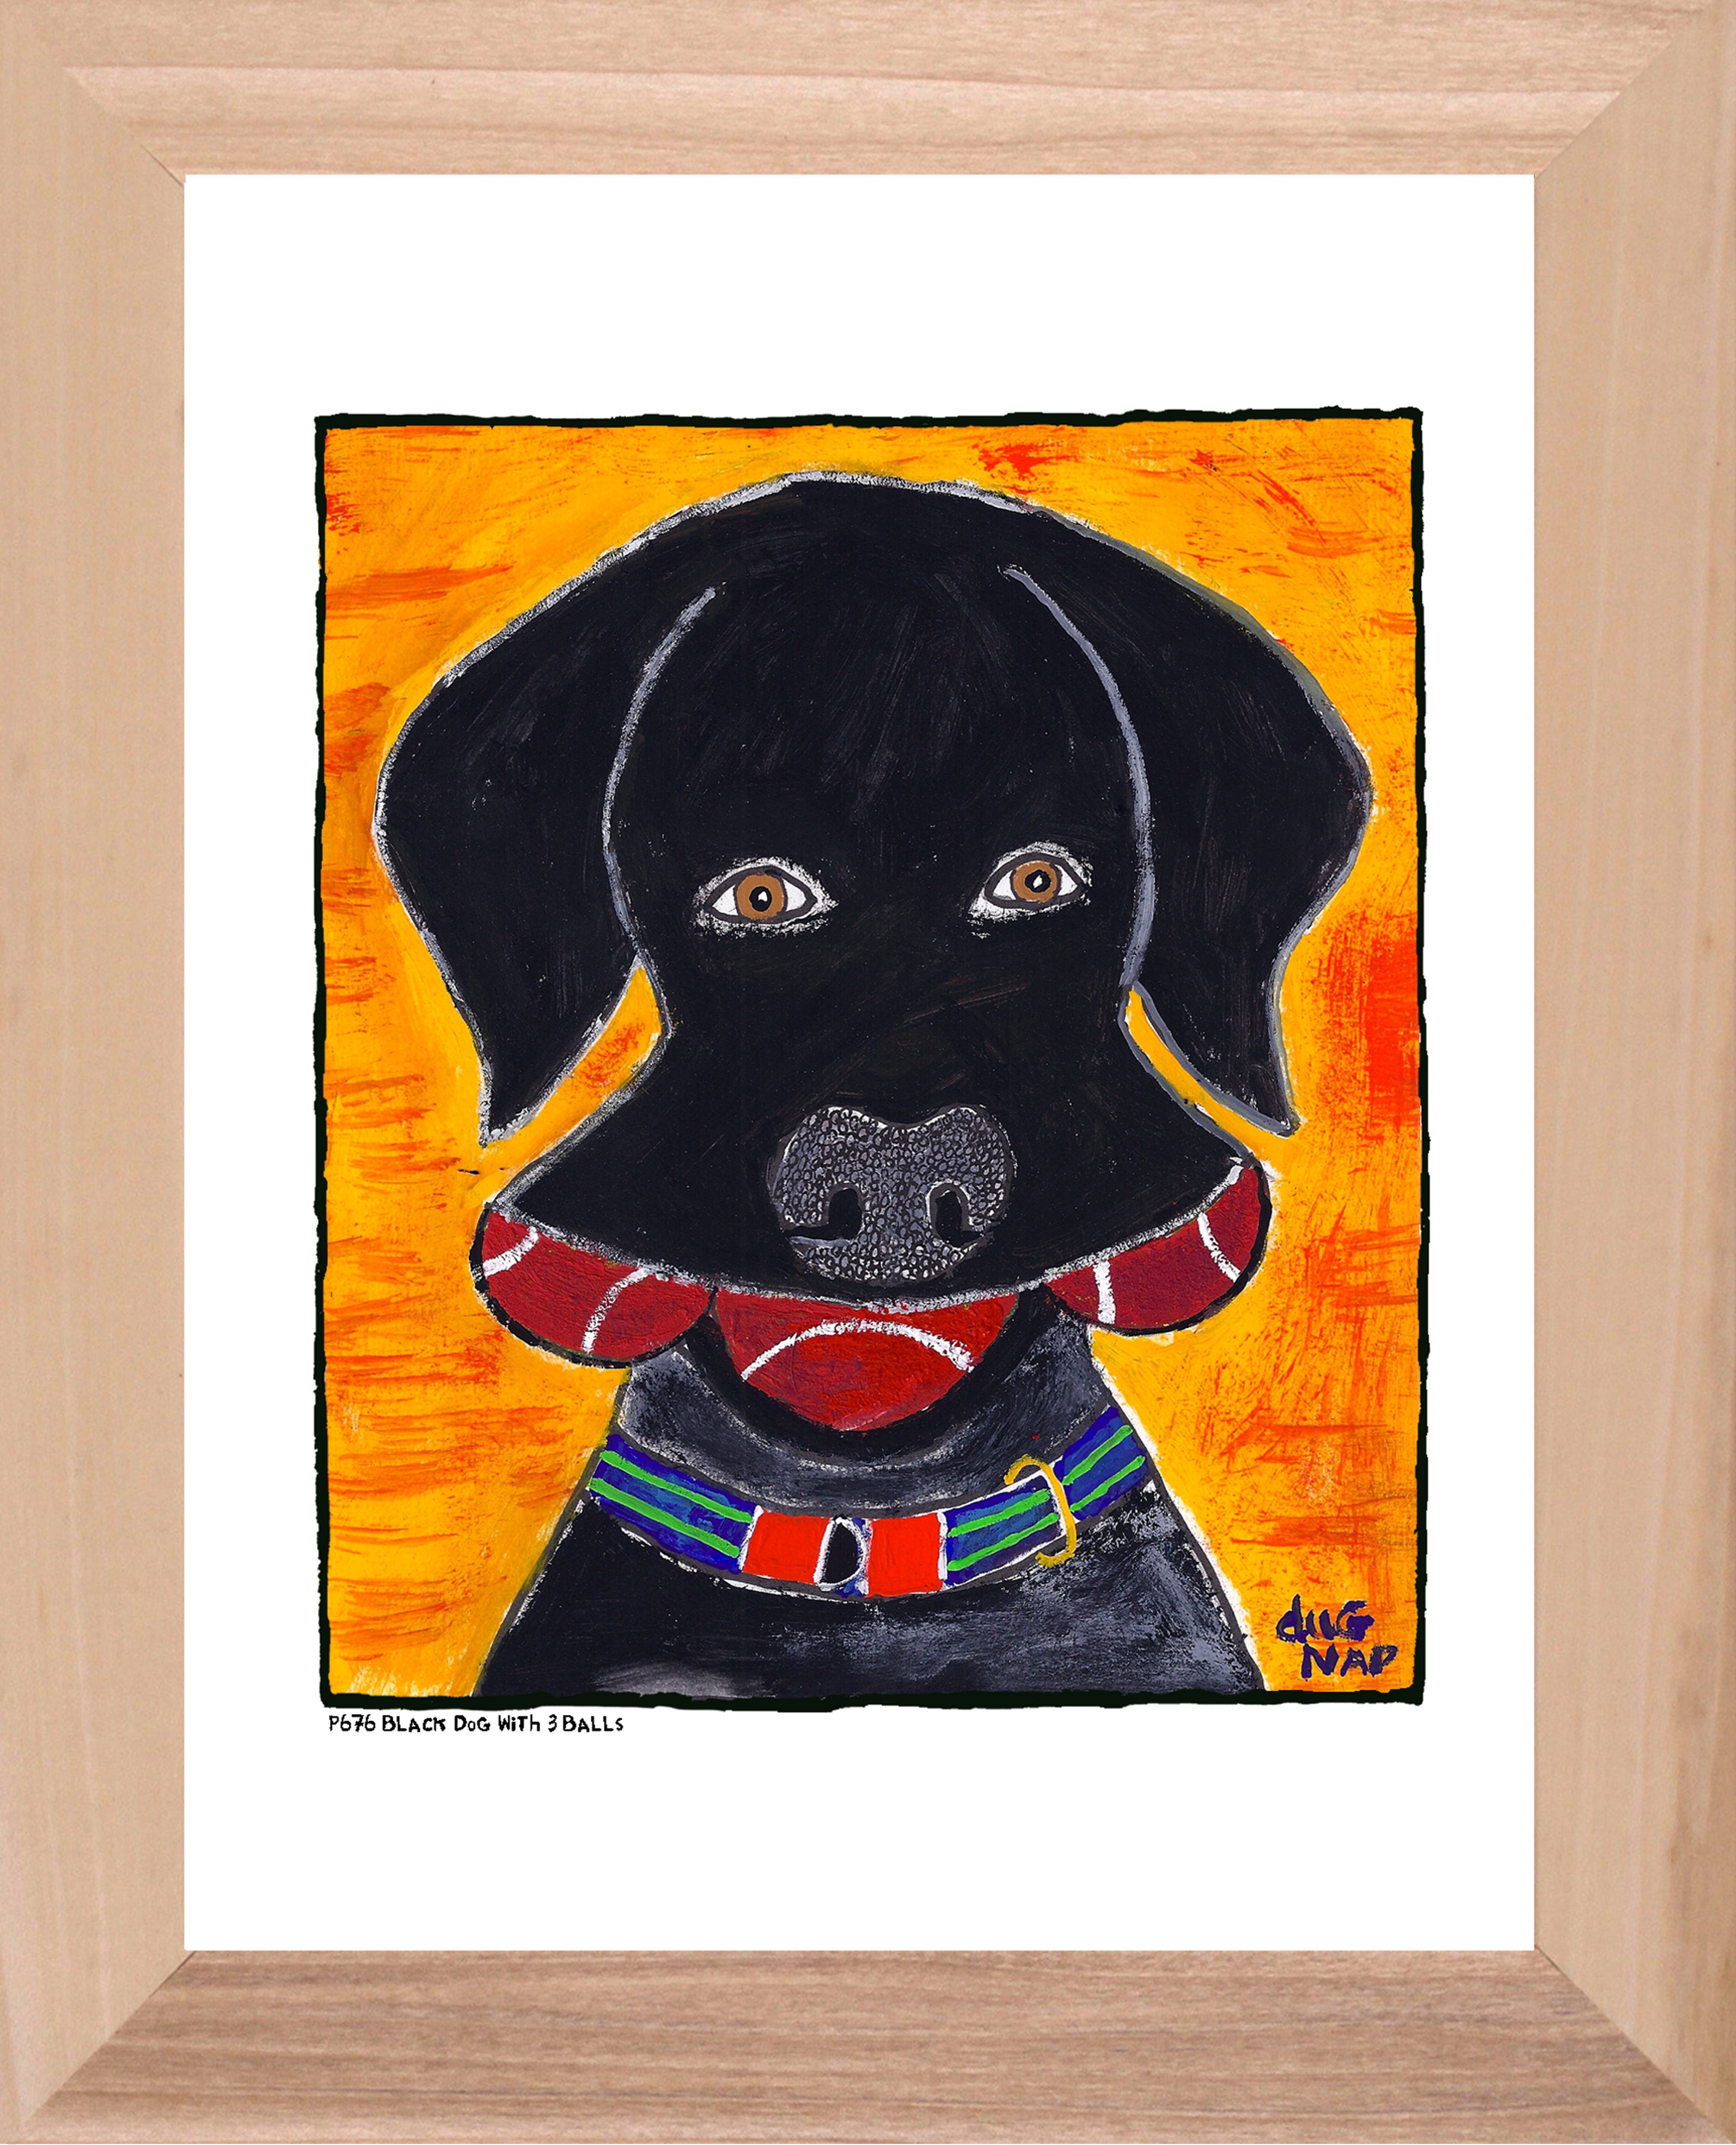 Black Dog Bright Star Key Chain – The Black Dog